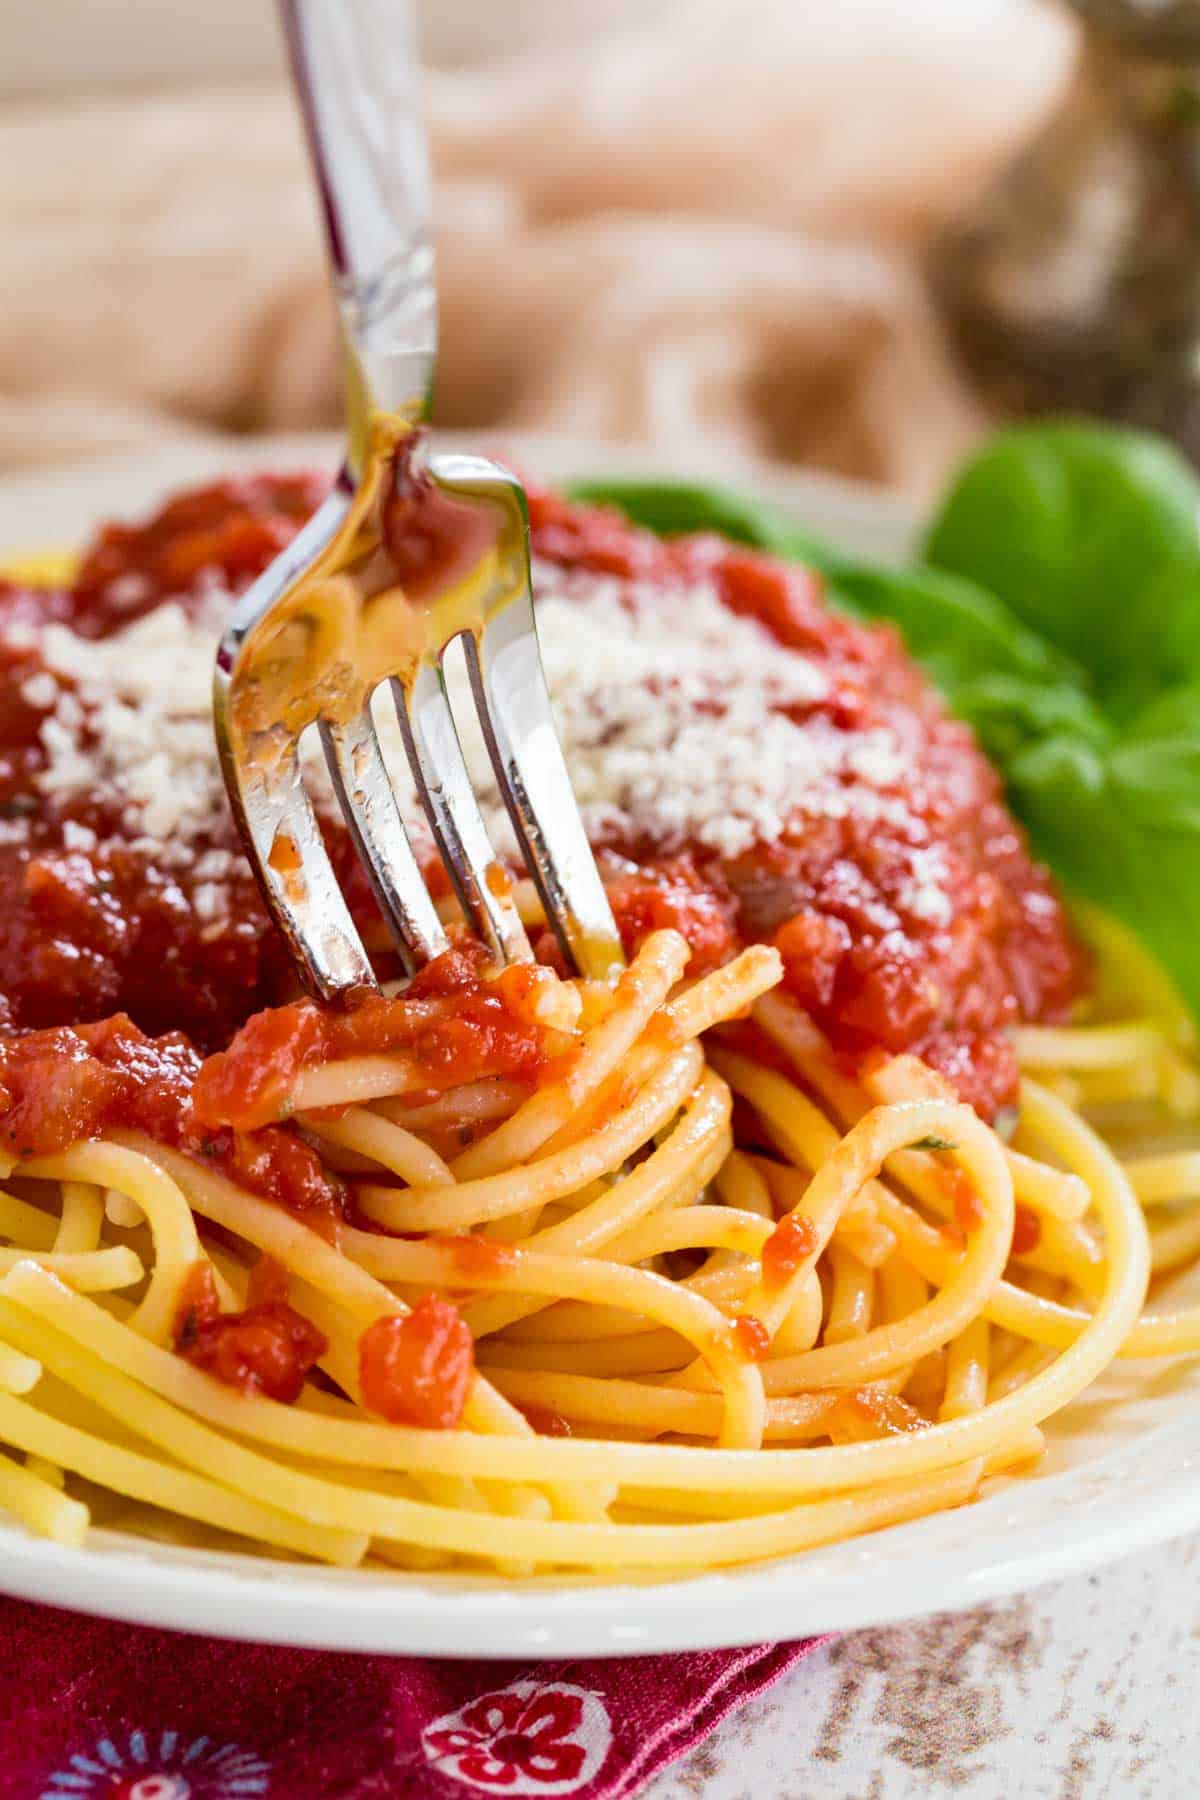 Spaghetti with marinara sauce and a fork.